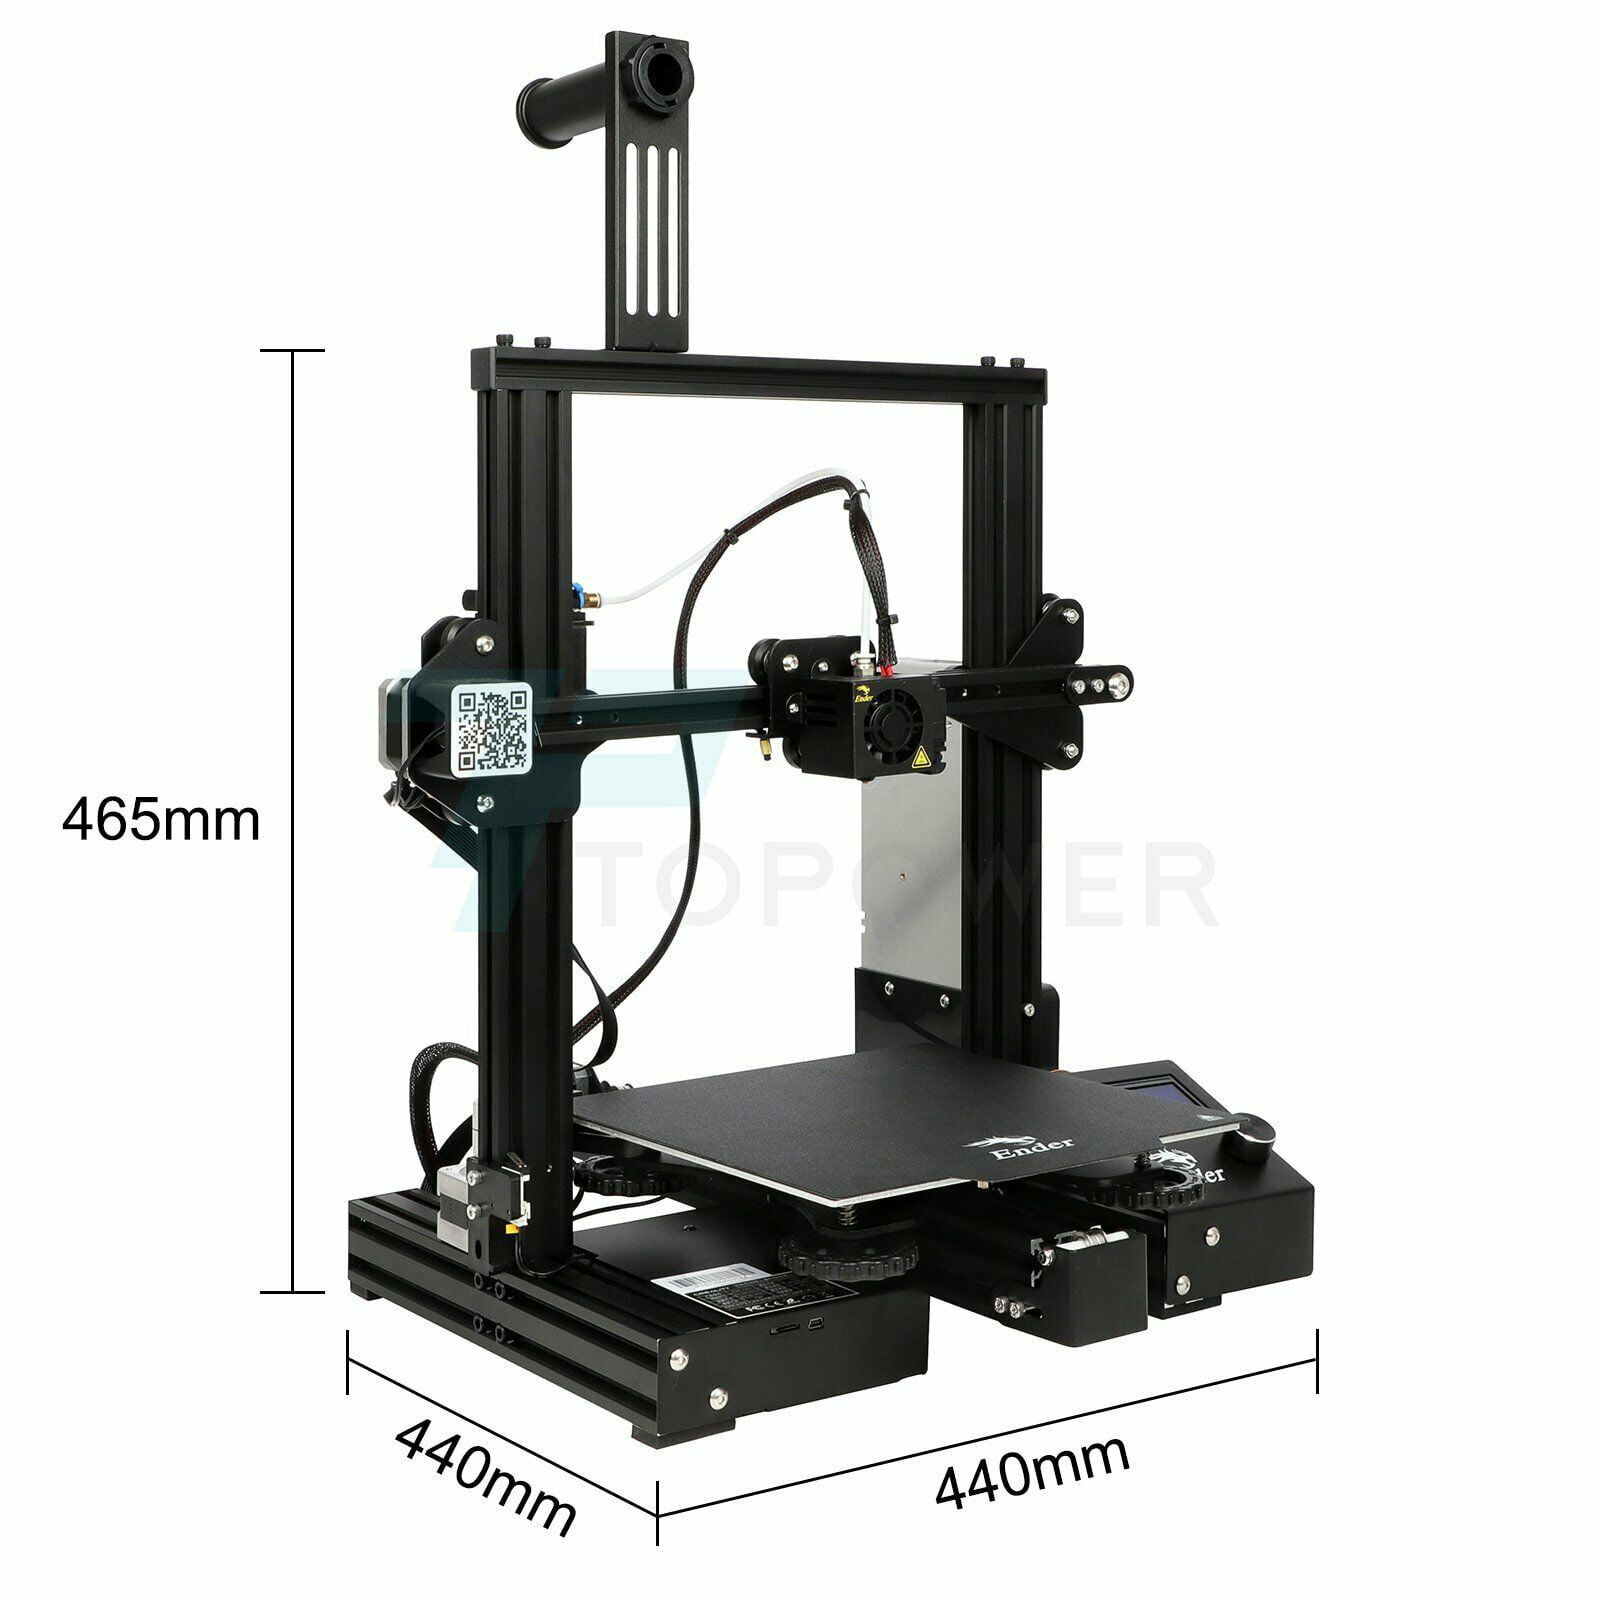 3D Printer Creality Ender 3 220X220X250mm DC 24V 15A Resume Print OSHW Certified 